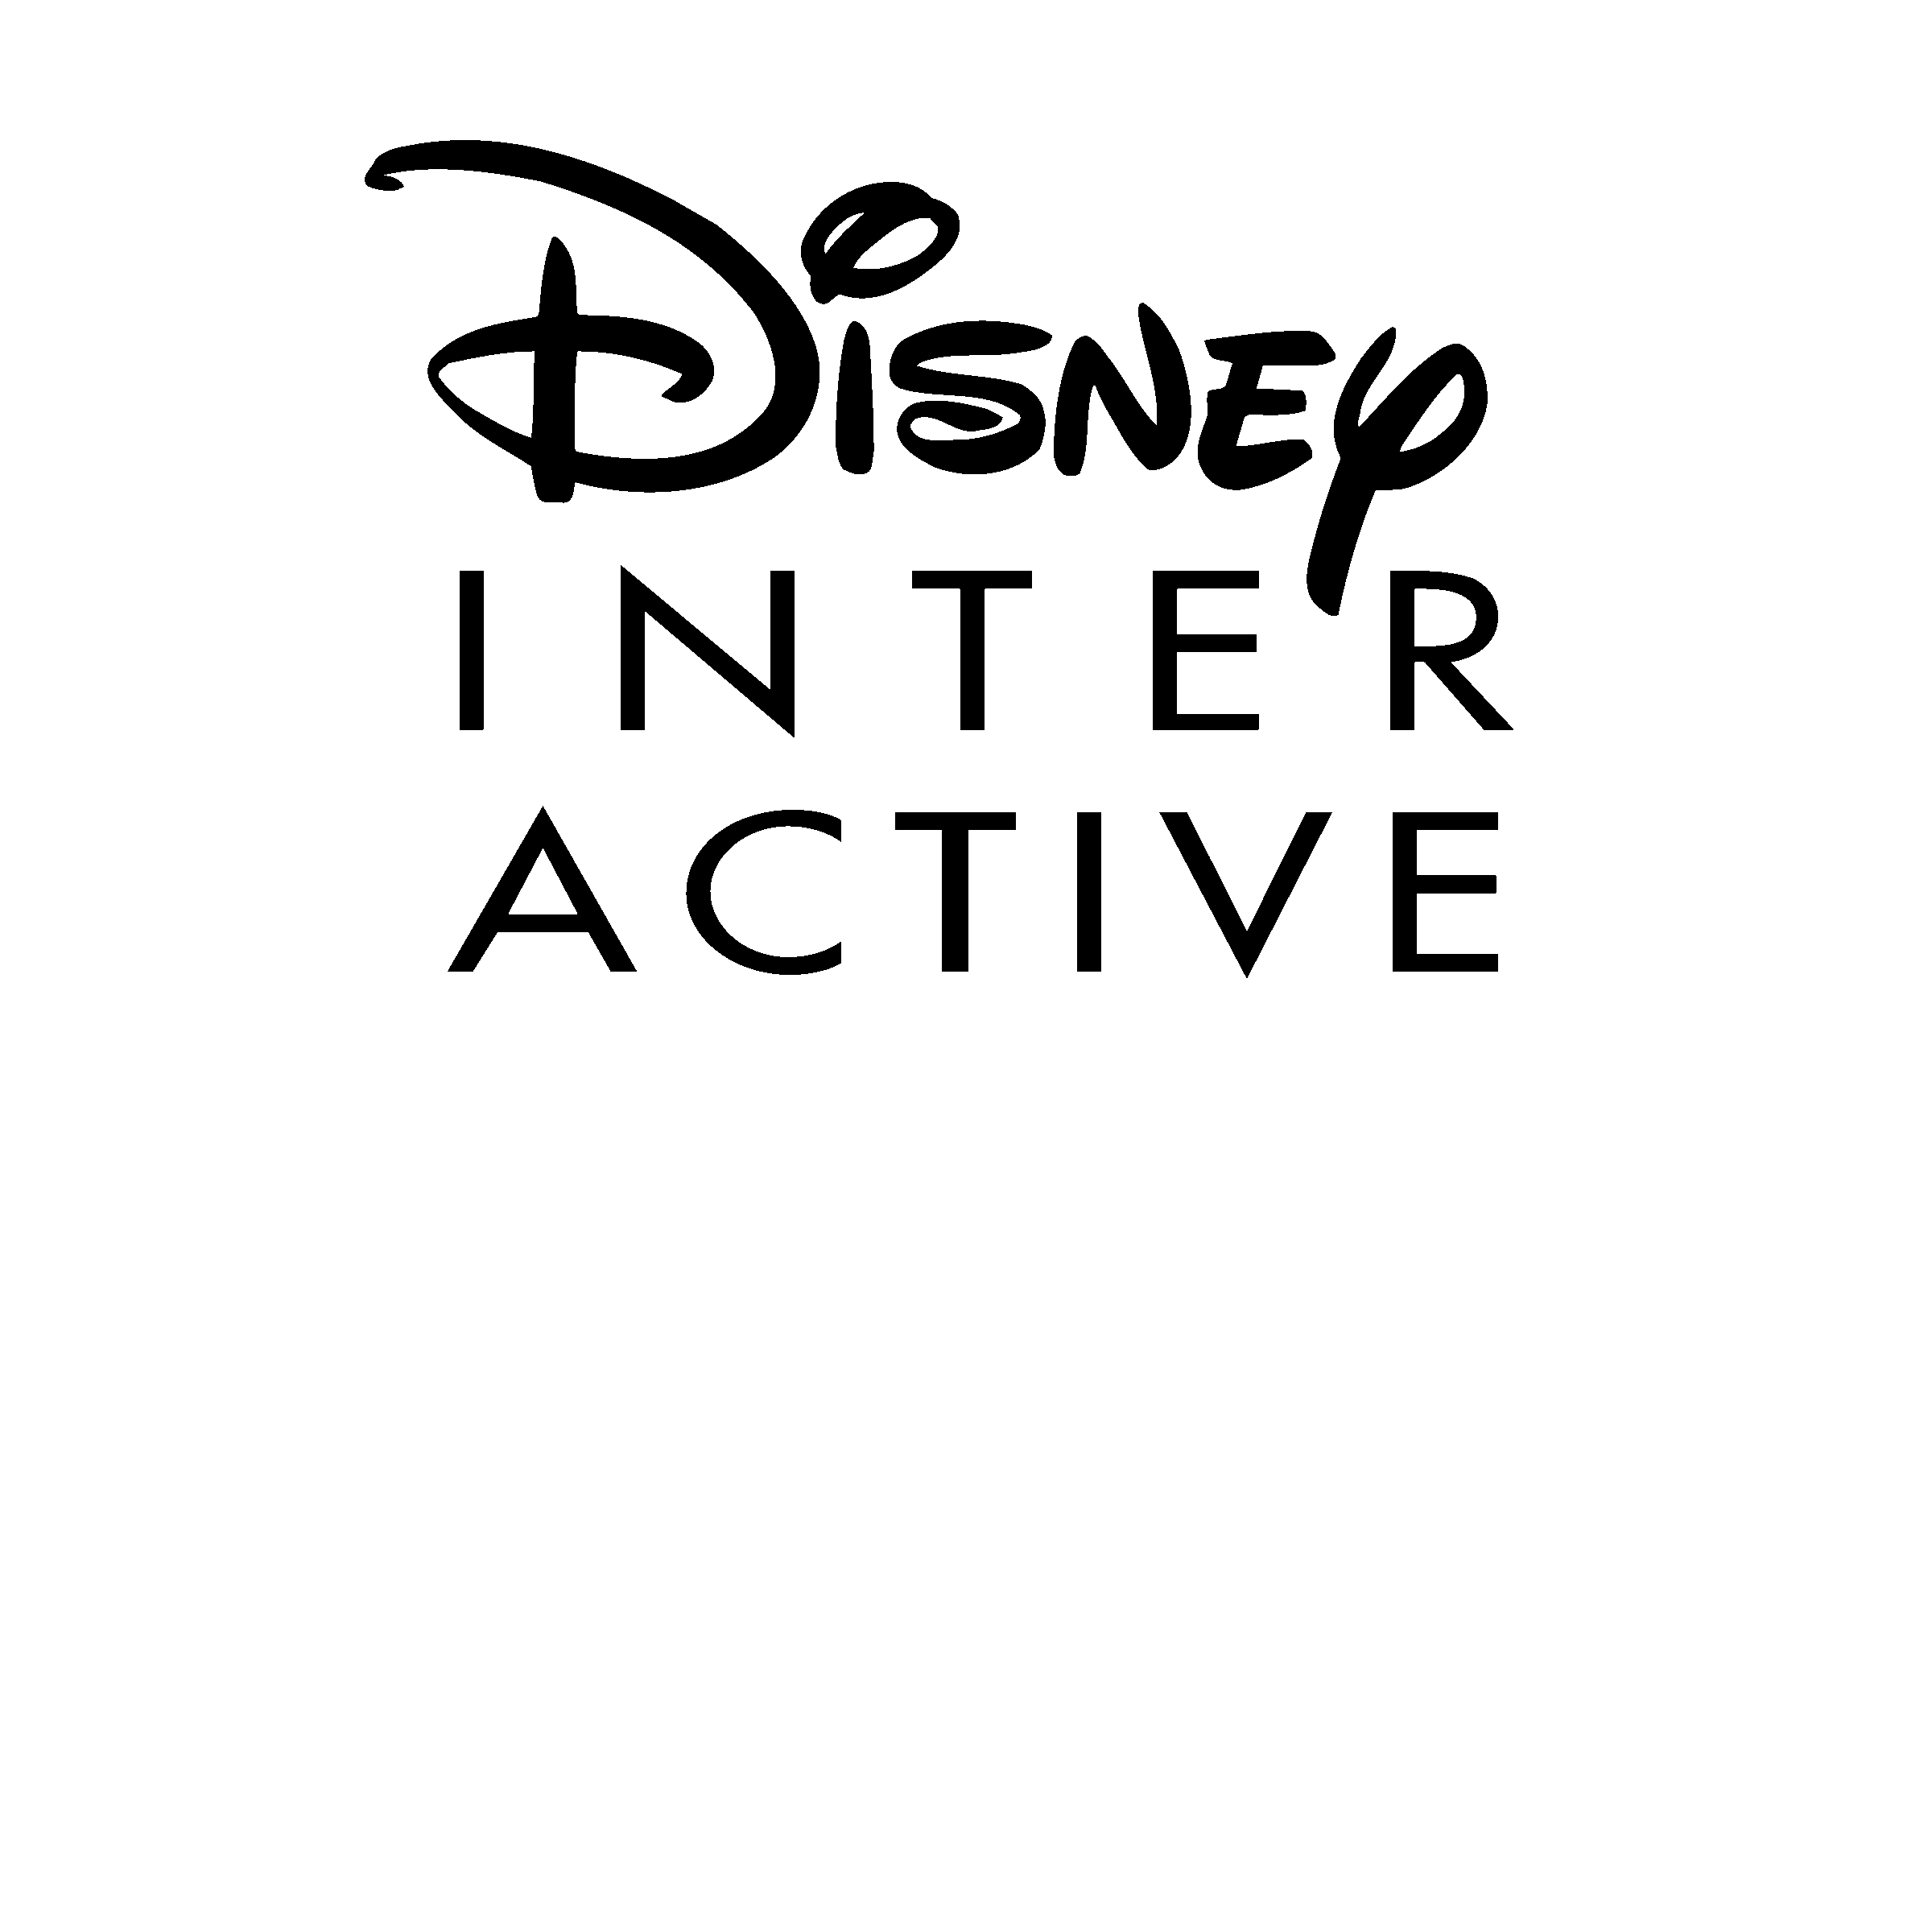 Disney Interactive Logo - Disney Interactive Logo PNG Transparent & SVG Vector - Freebie Supply